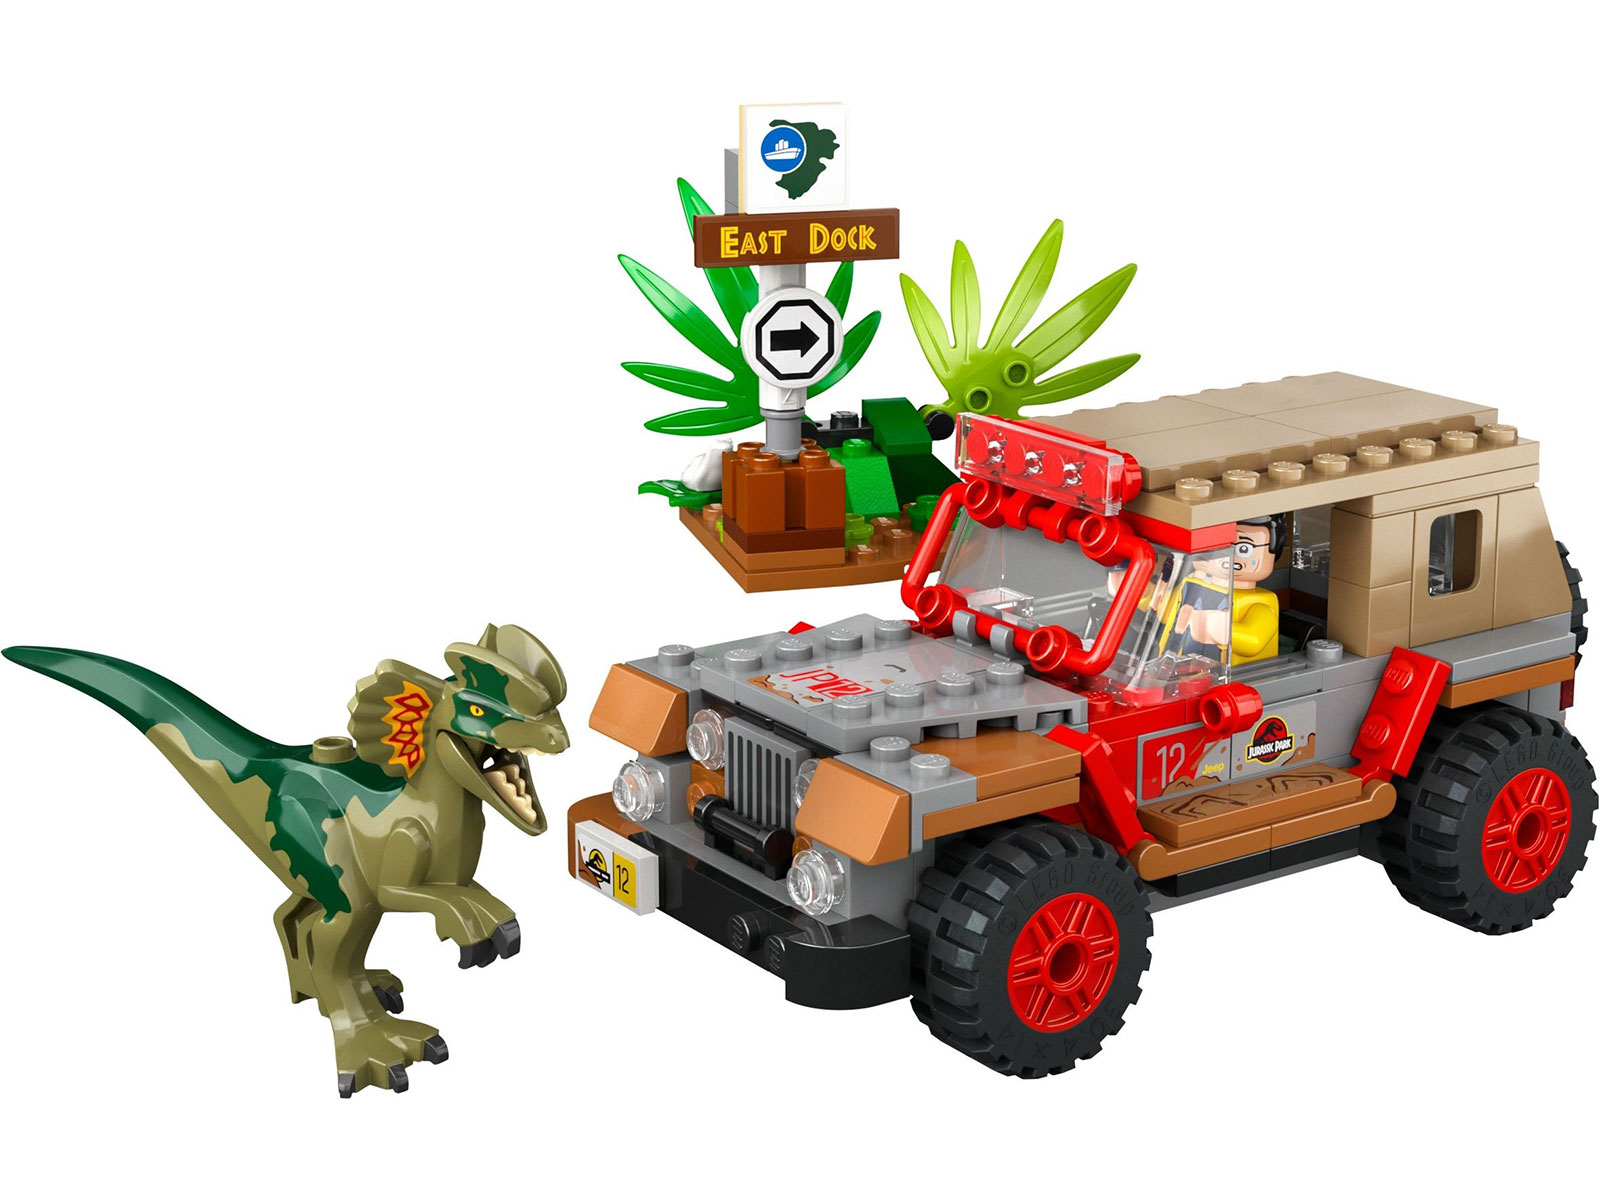 LEGO® Jurassic World 76958 - Hinterhalt des Dilophosaurus